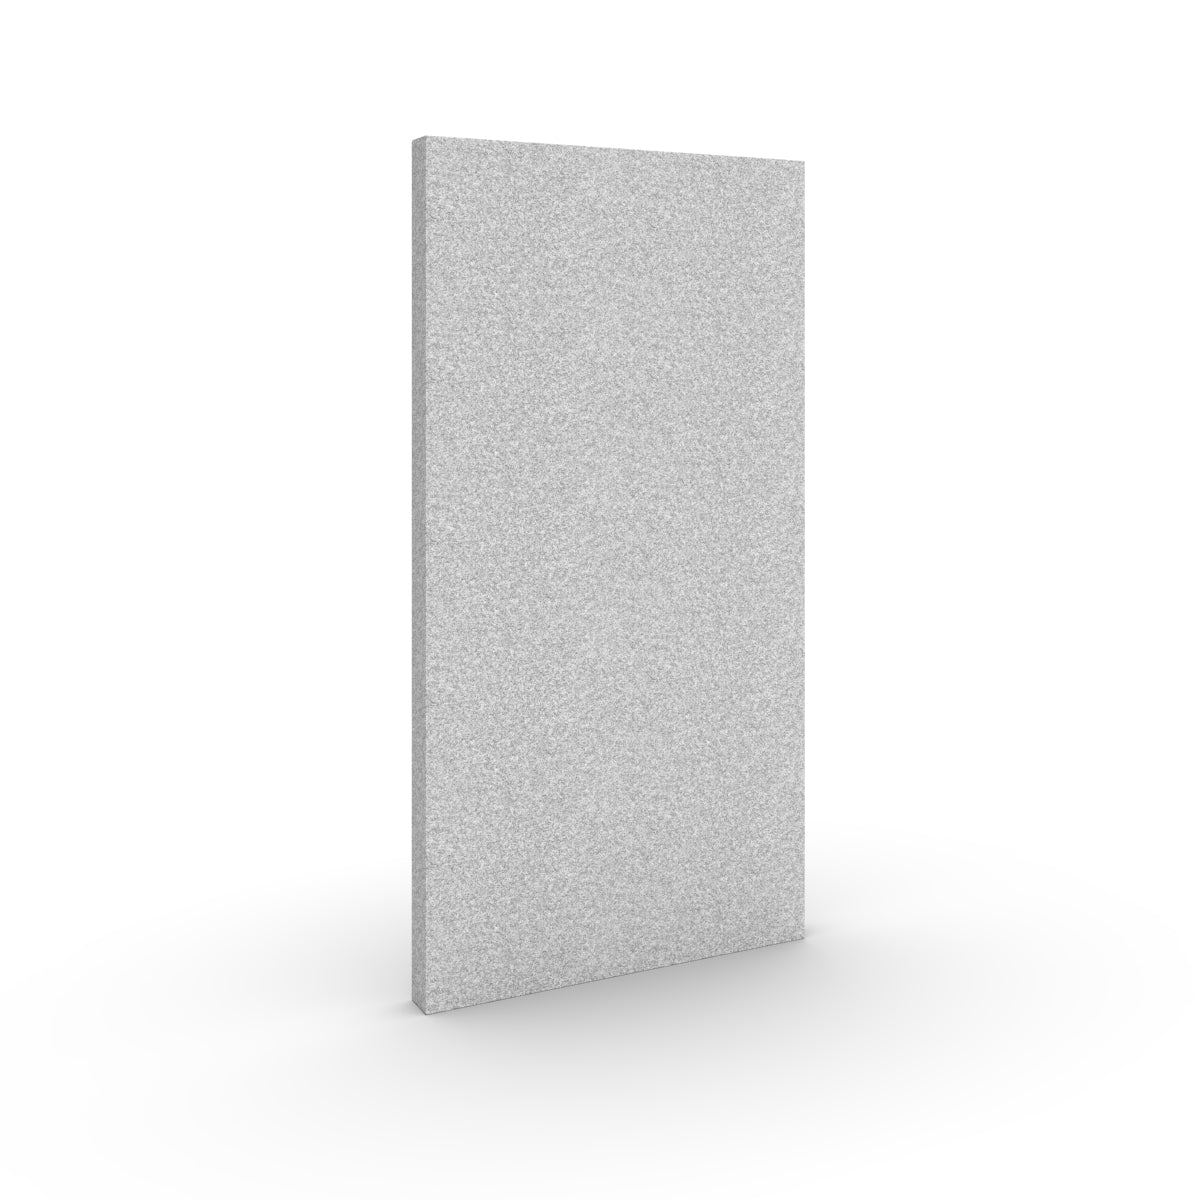 Basic wall sound absorber in light grey acoustic wool felt textile. Size 58cmx116cm. Akustikkplater og lyddemping vegg